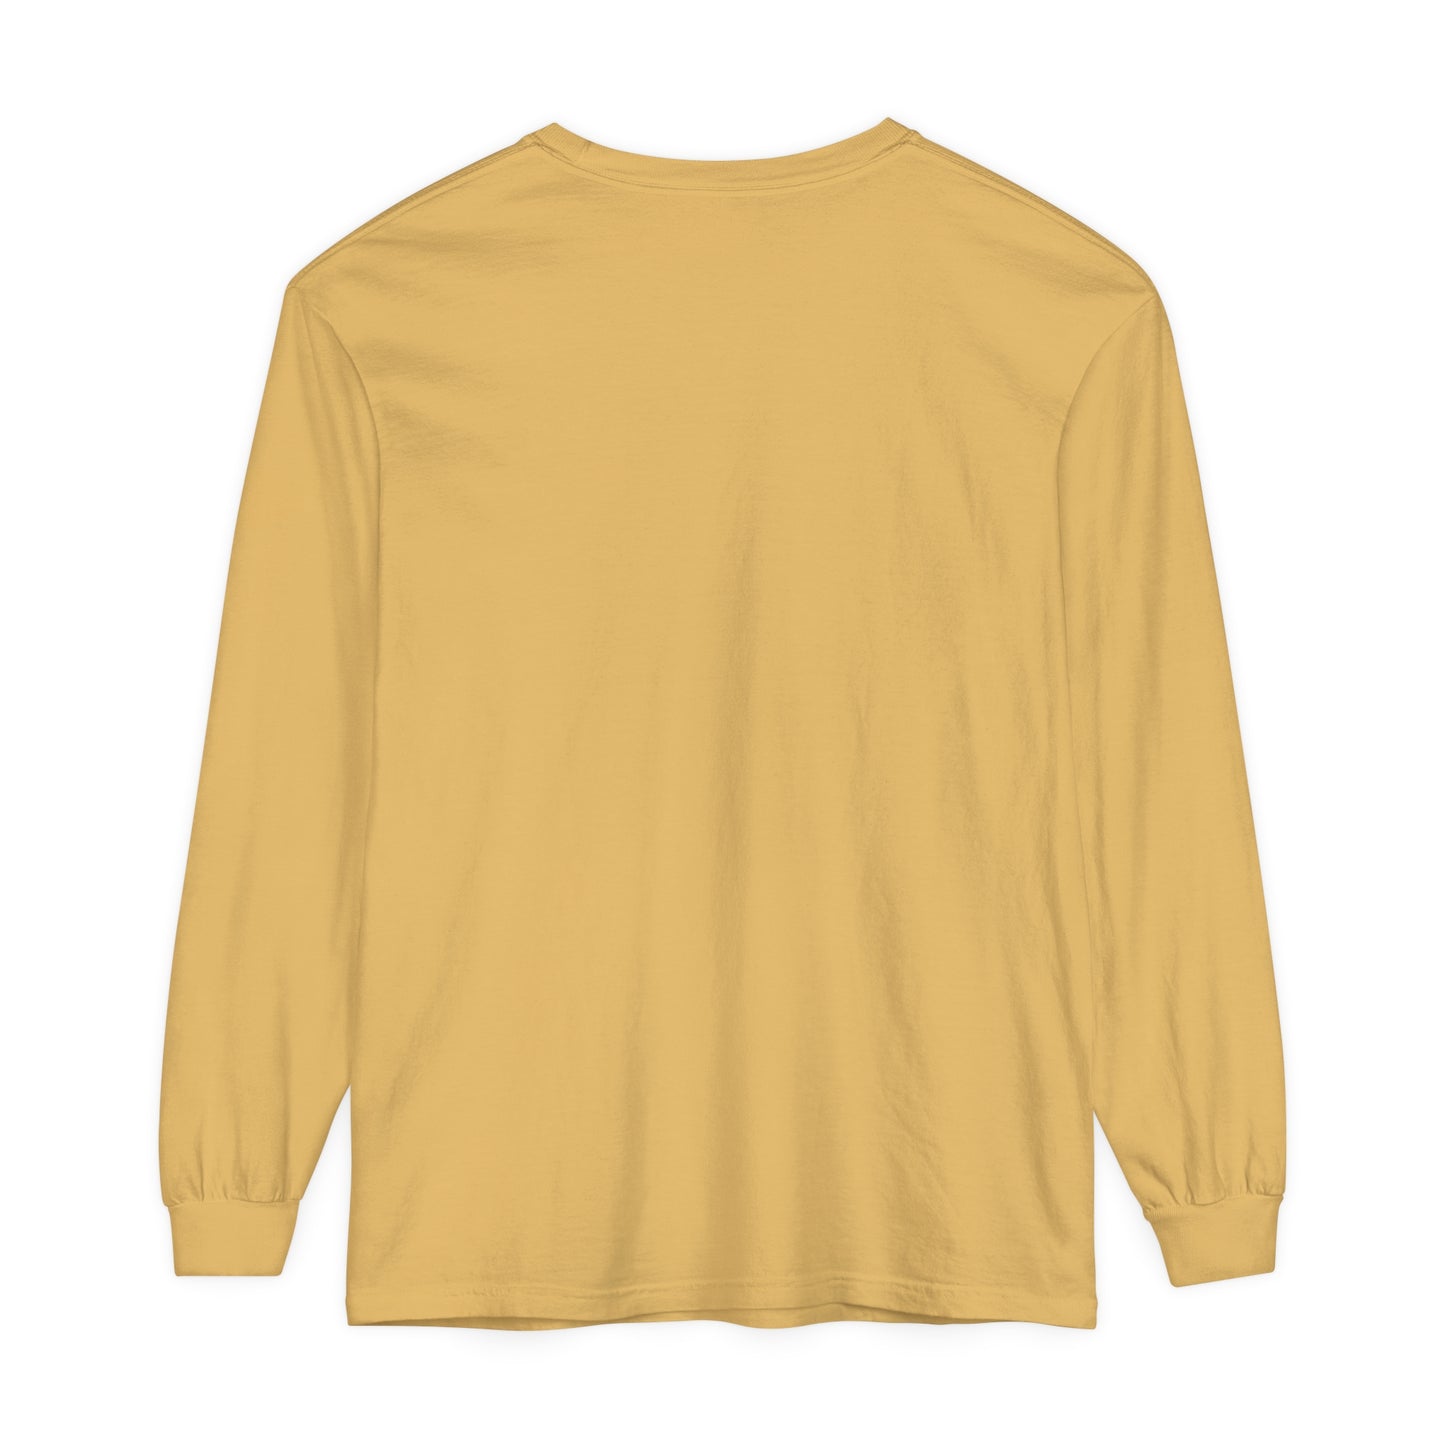 DQU COMFORT COLORS Unisex Garment-dyed Long Sleeve T-Shirt